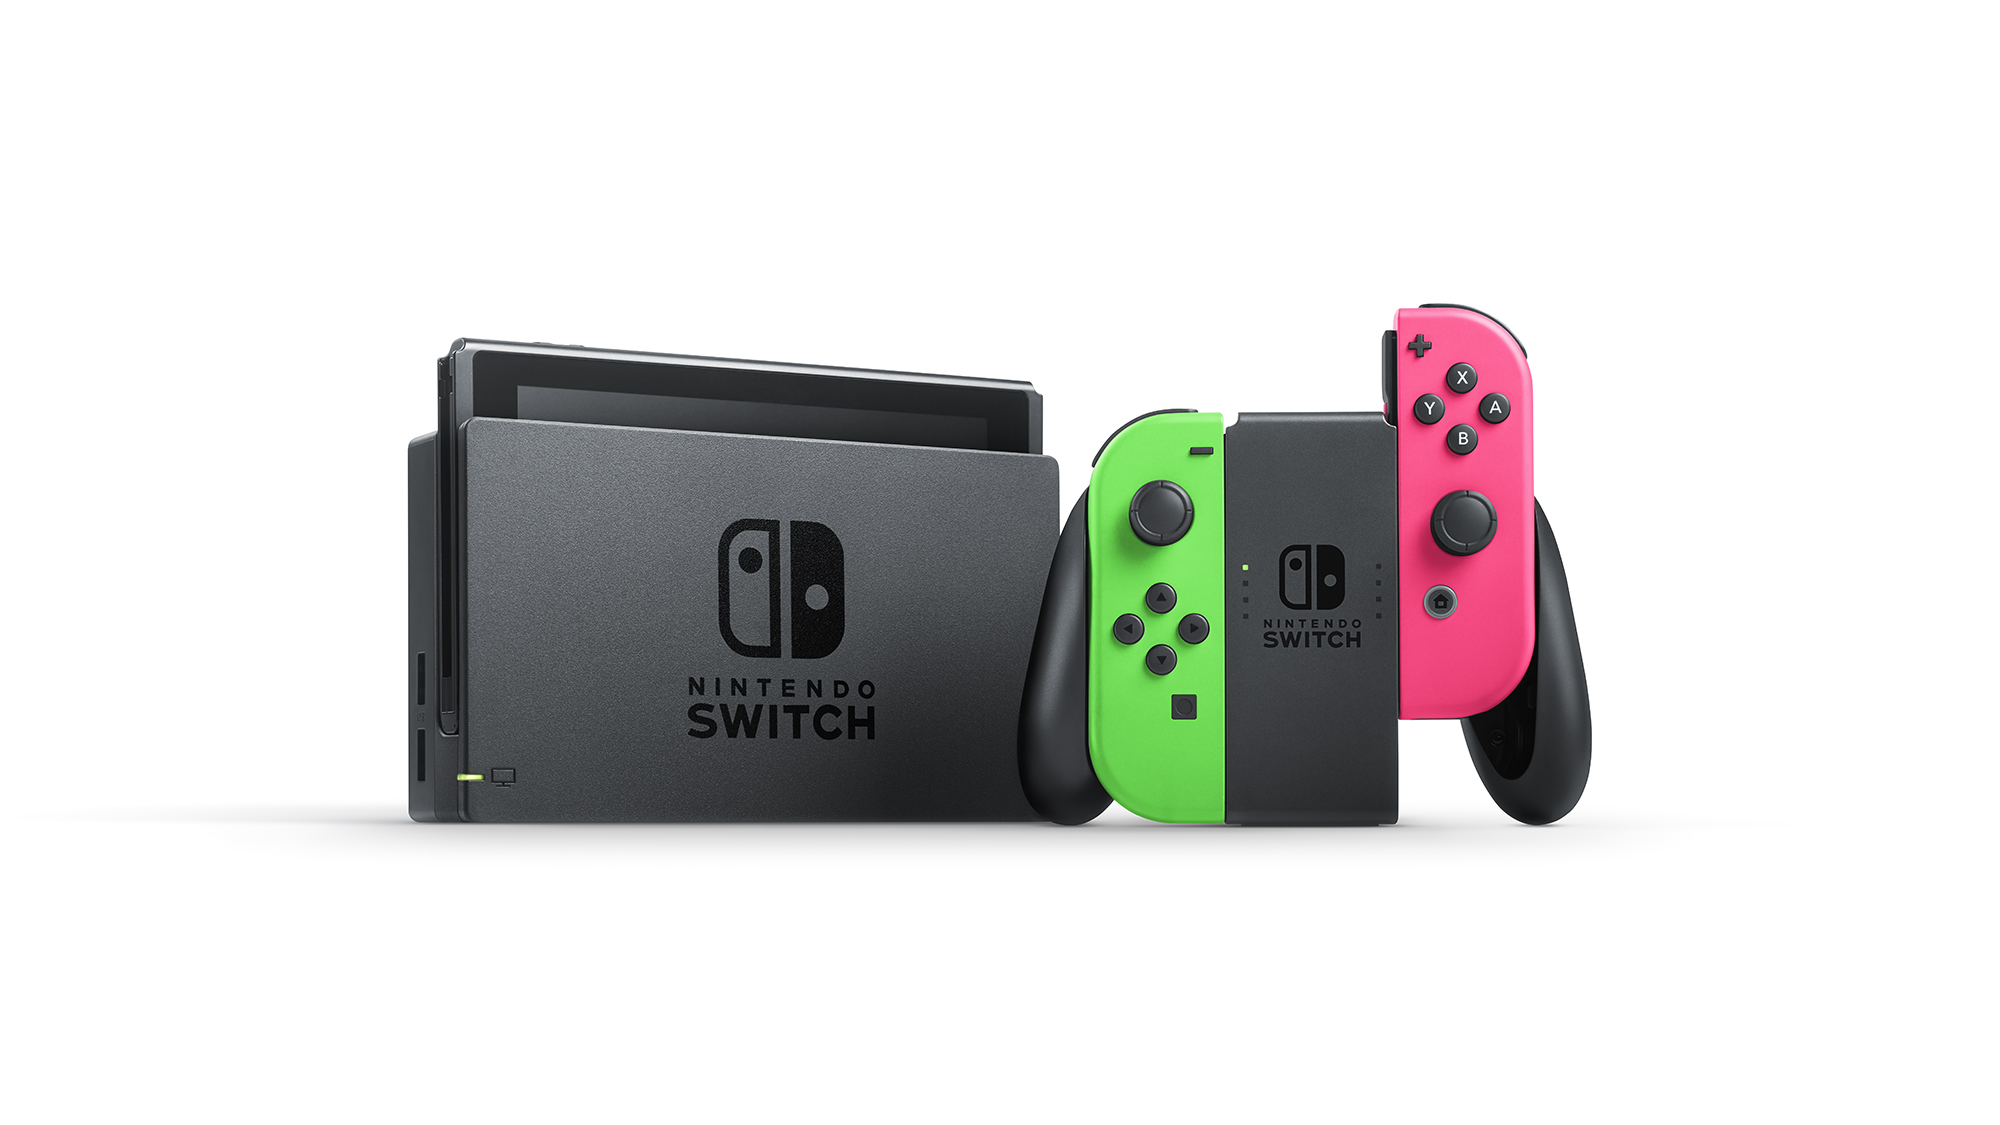 Nintendo Switch Hardware with Splatoon 2 + Neon Green/Neon Pink Joy-Cons (Nintendo Switch) - image 2 of 11